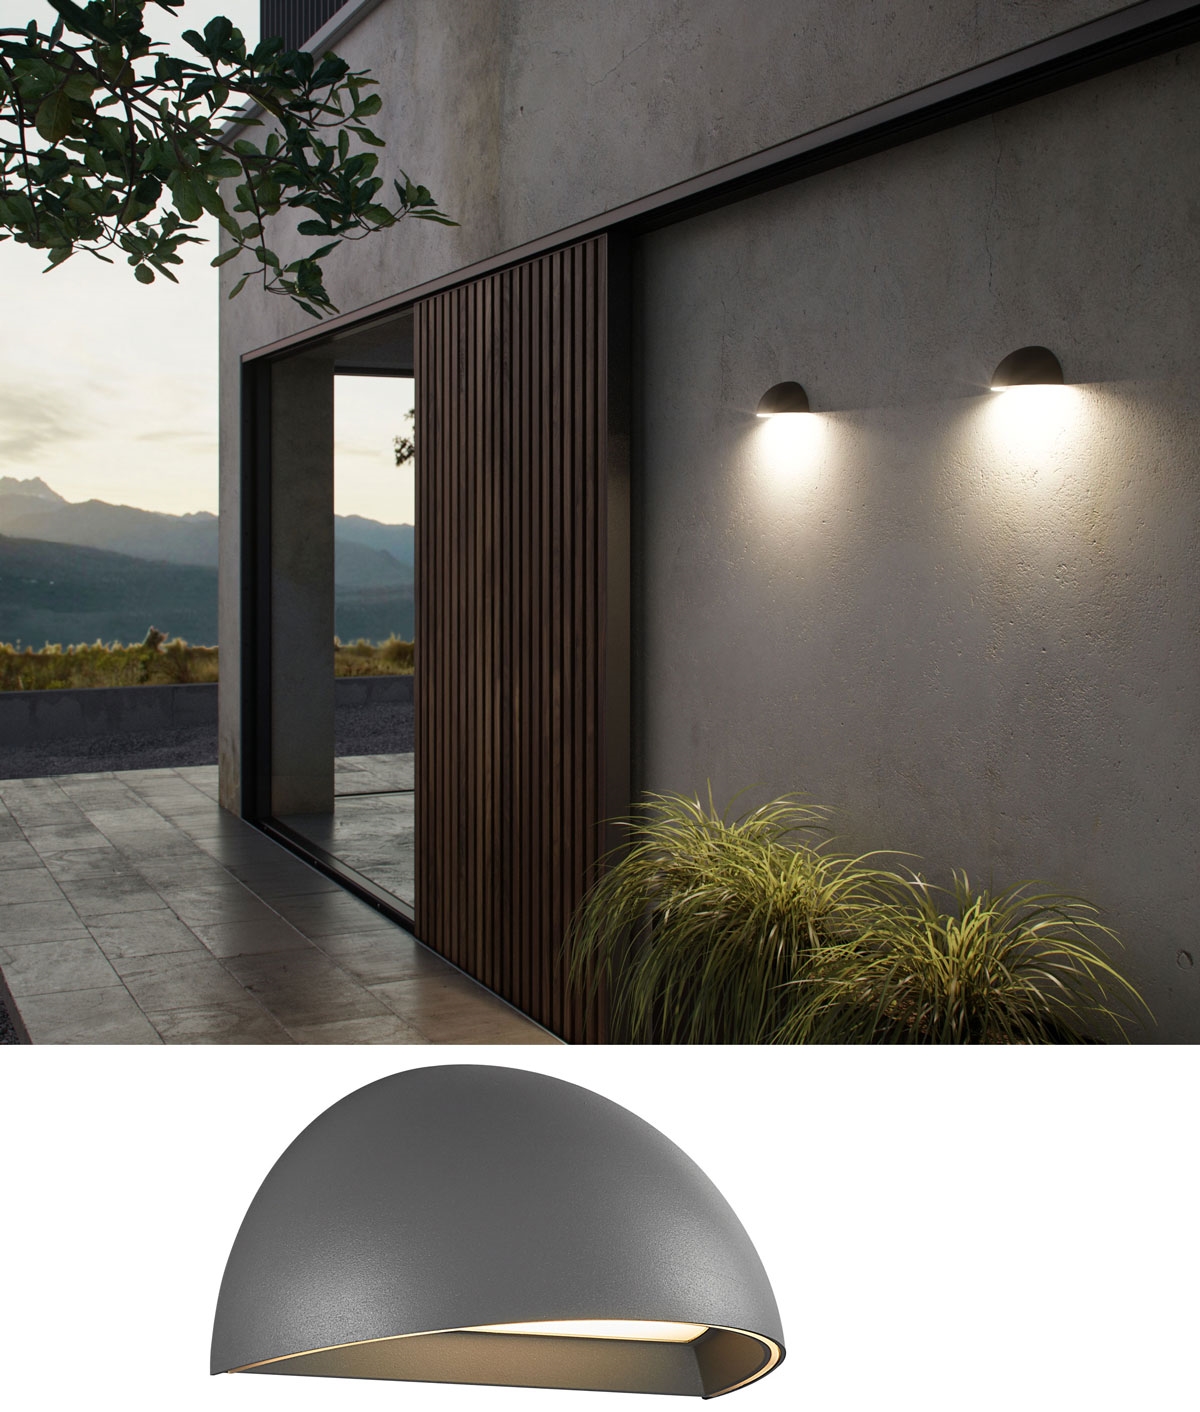 Aluminum Alloy Wall Mounted Corridor Lamp, LED Wall Light, Wall Mounted Lamp,  for Indoor Outdoor Ground/Garden : : Home & Kitchen